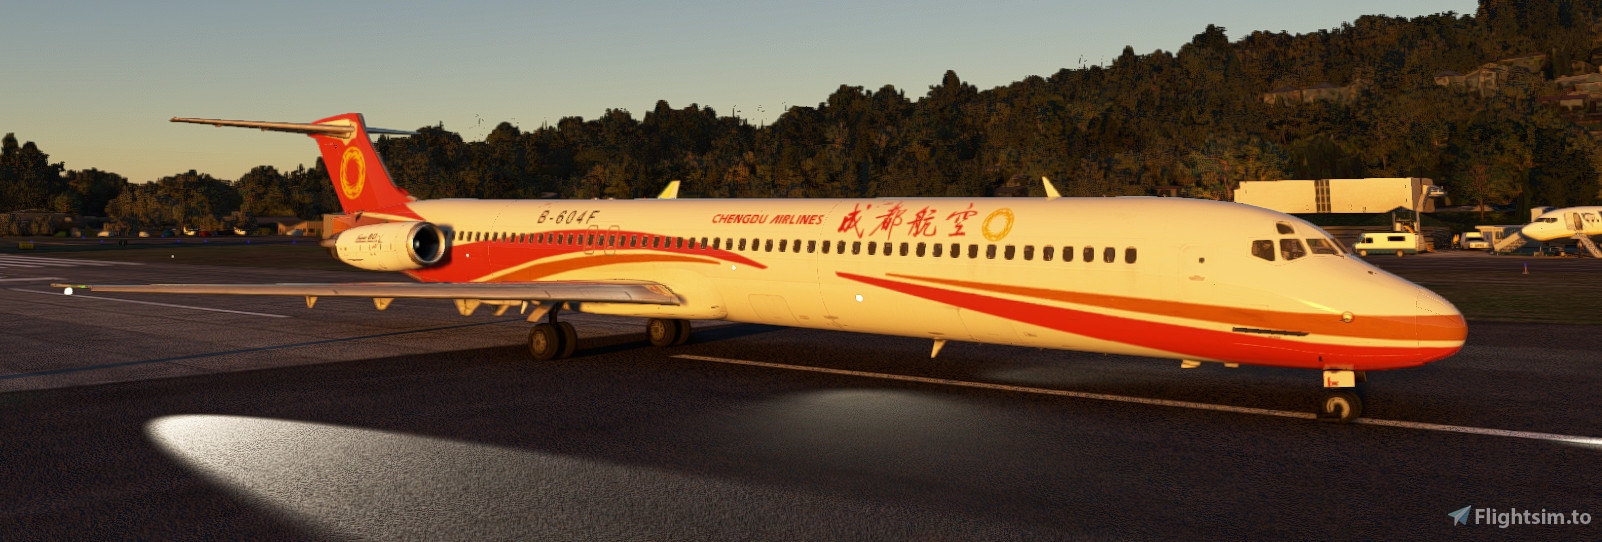 MD83 成都航空Chengdu Airlines B-604F（虛構塗裝） for Microsoft 